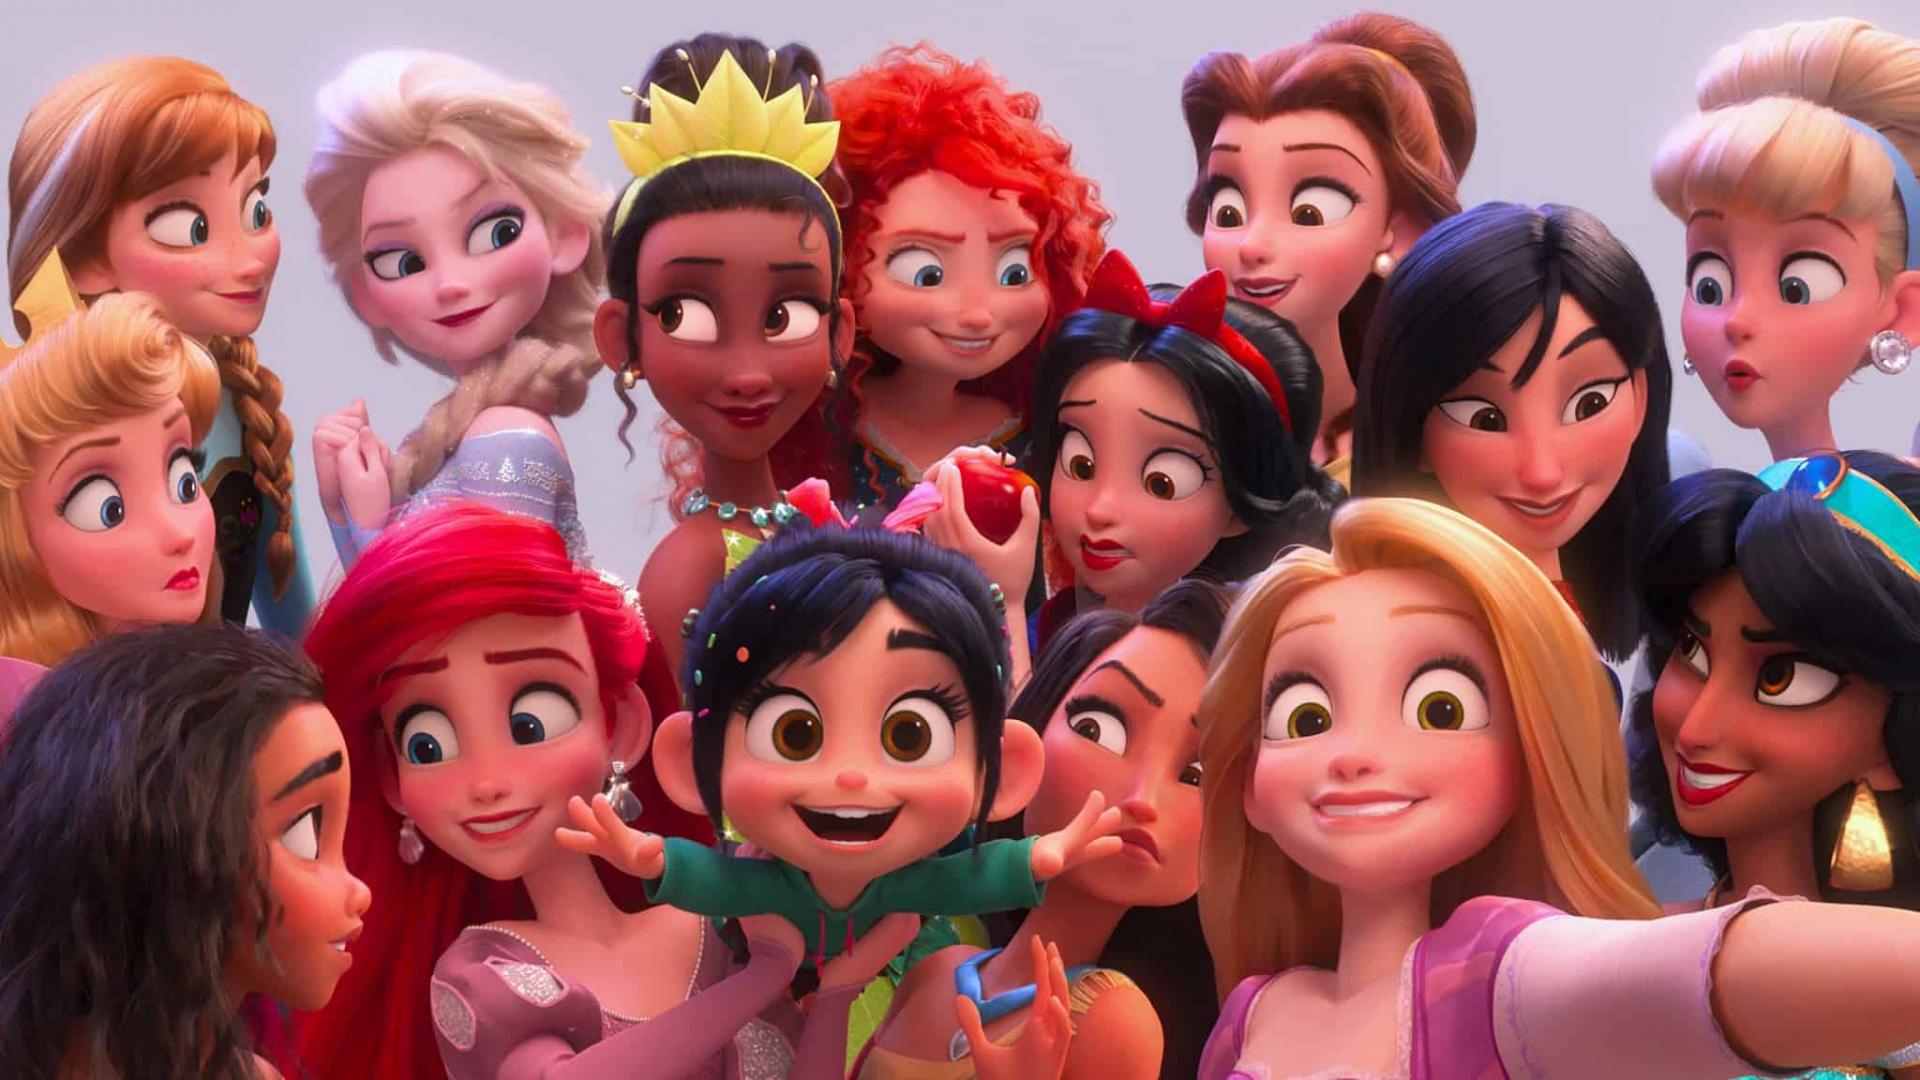 Classic Disney princess characters